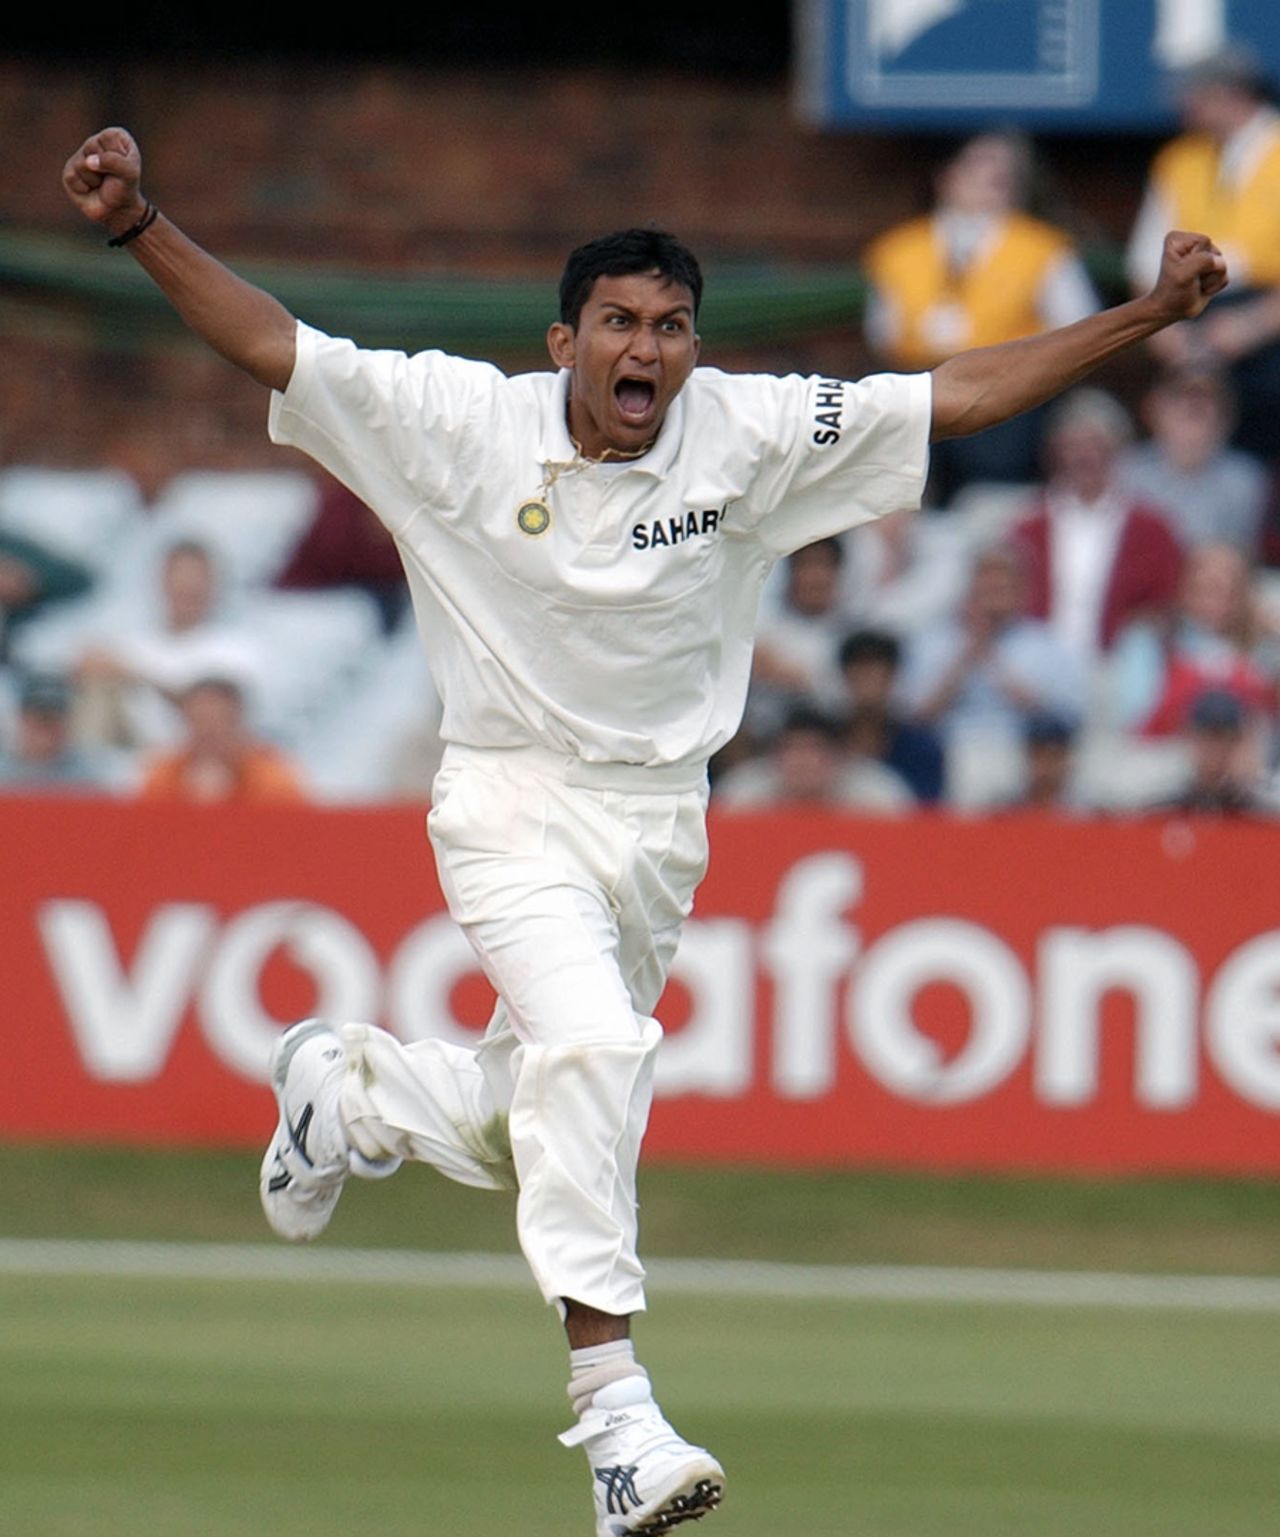 Sanjay Bangar celebrates Mark Butcher's wicket, England v India, 3rd Test, Headingley, 4th day, August 25, 2002